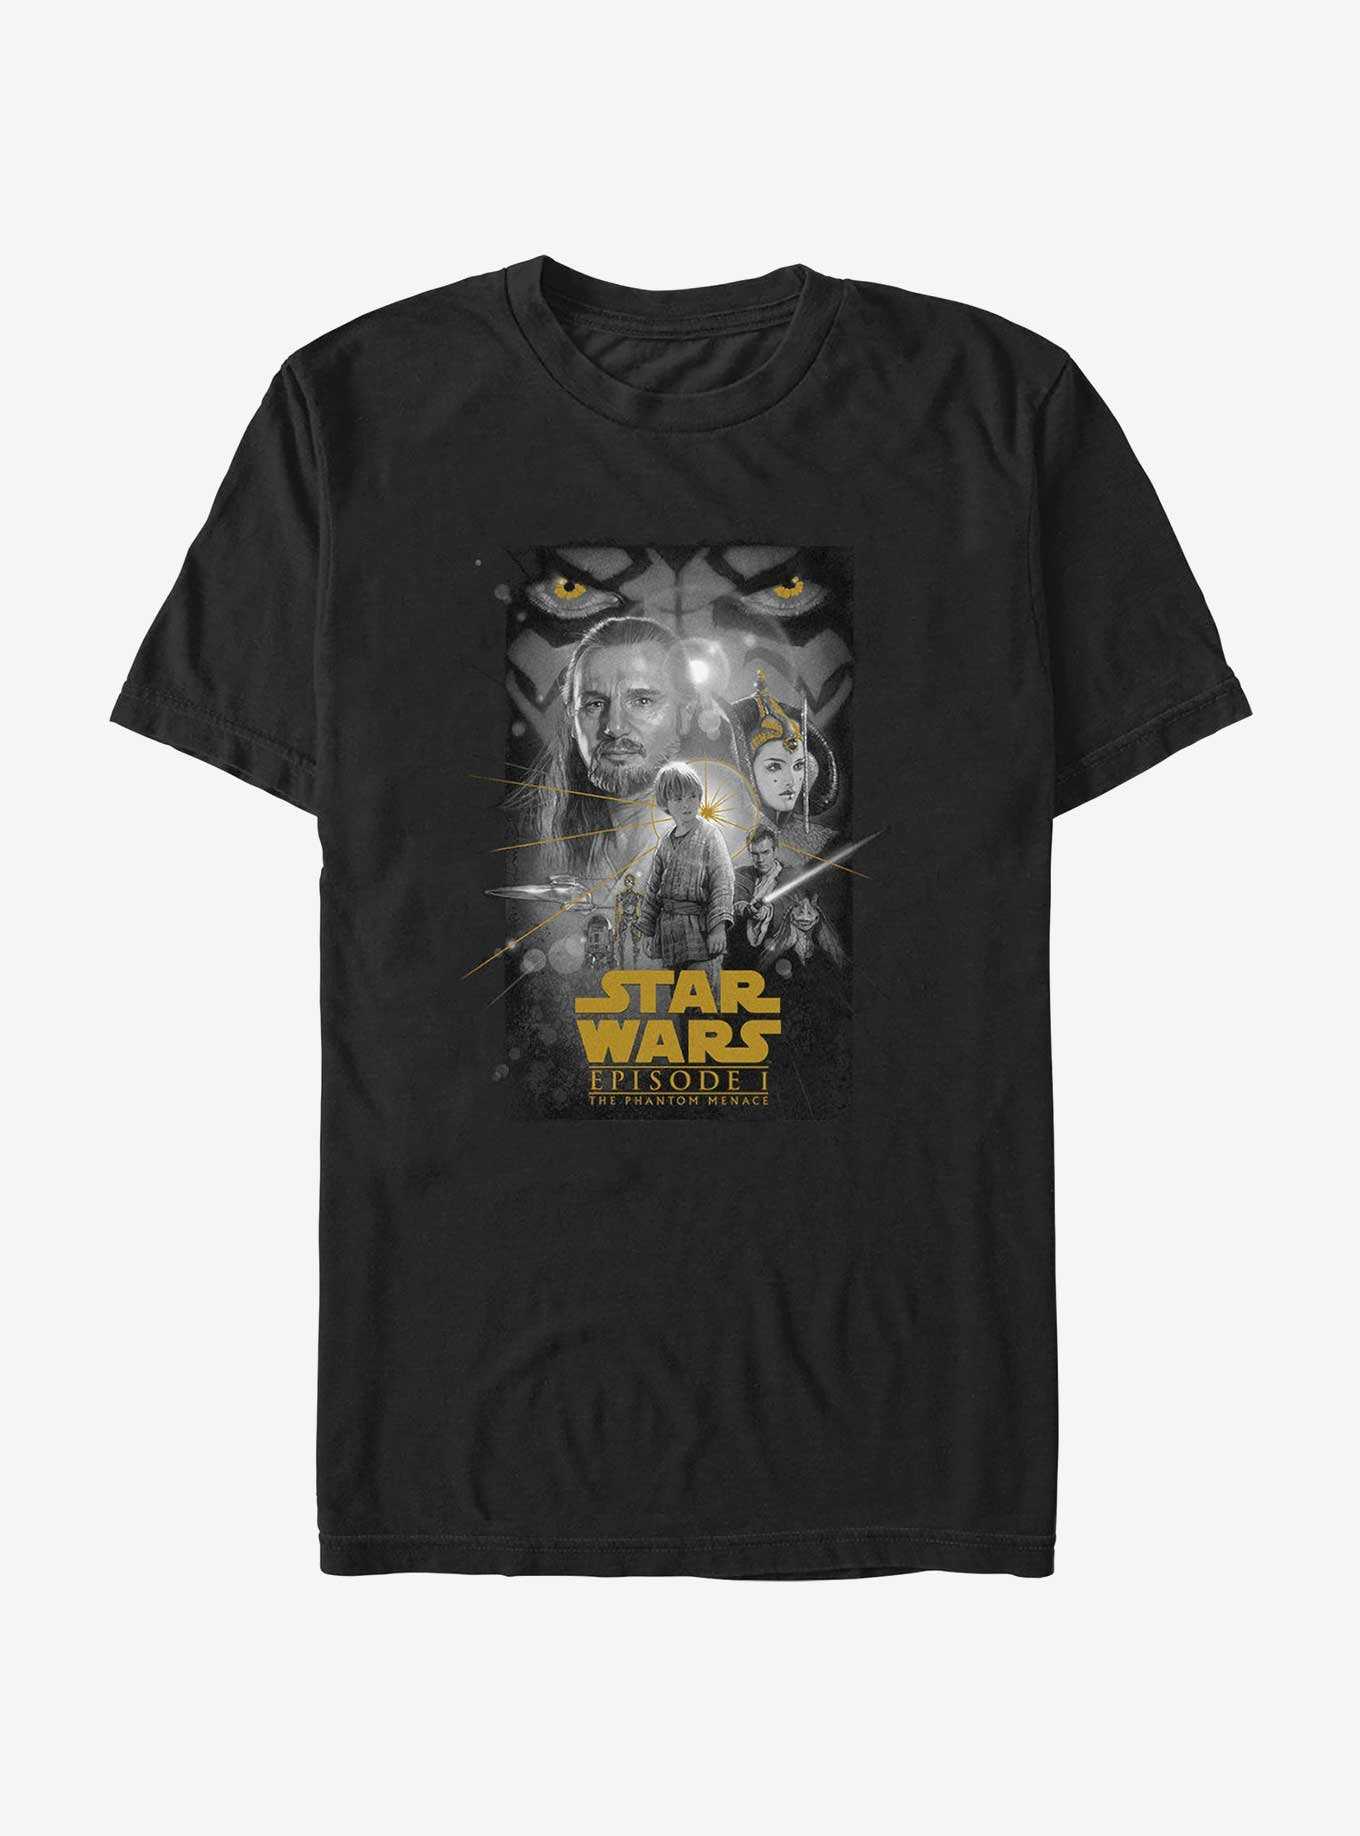 Star Wars Episode I: The Phantom Menace Poster T-Shirt, , hi-res